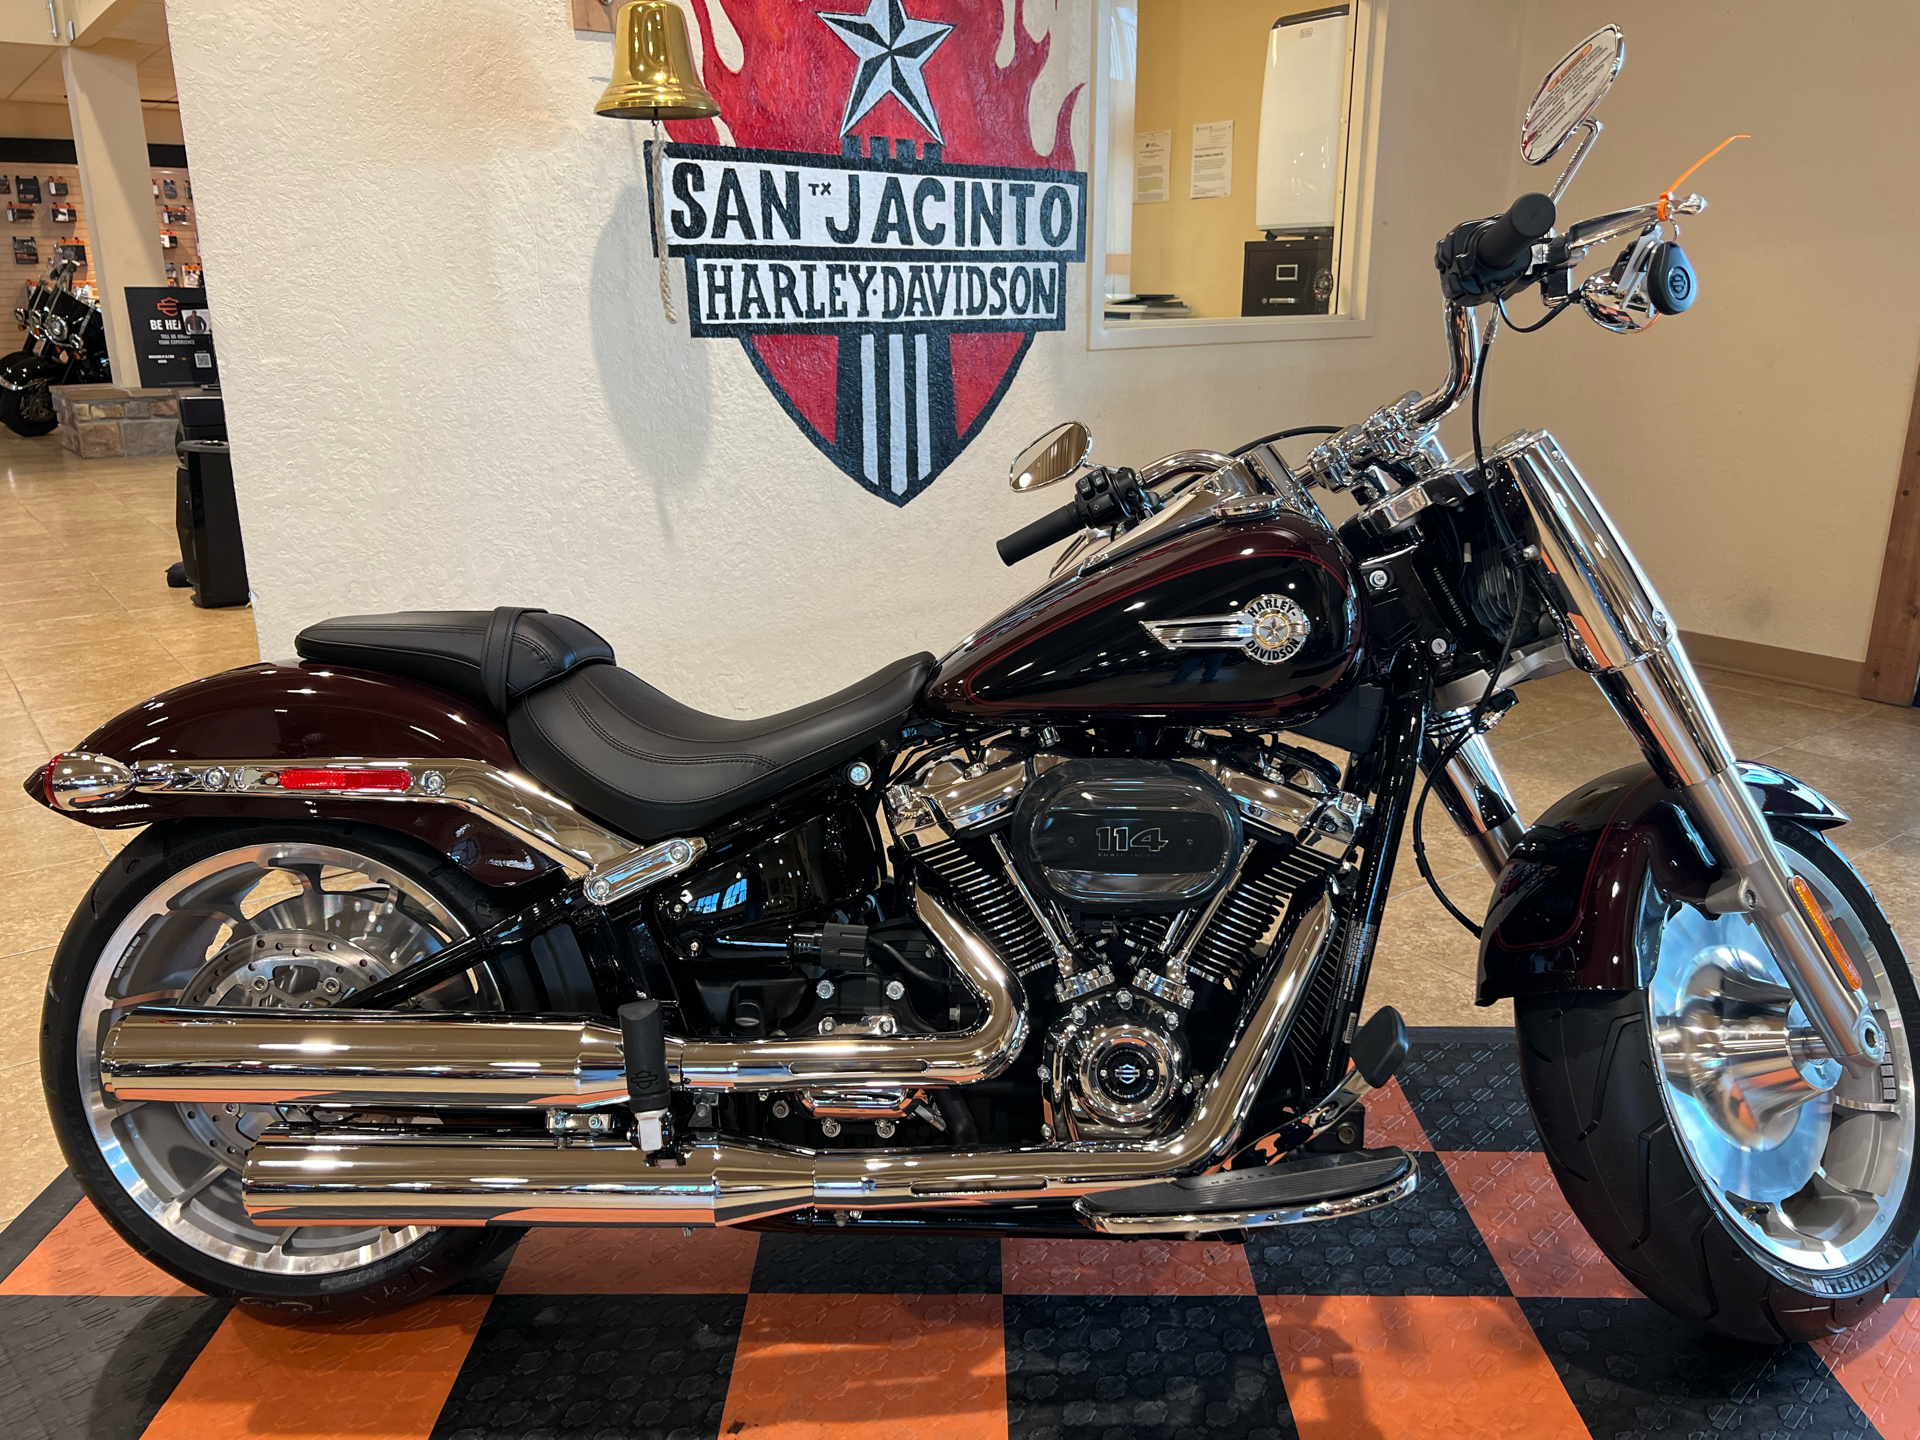 2022 Harley-Davidson Fat Boy® 114 in Pasadena, Texas